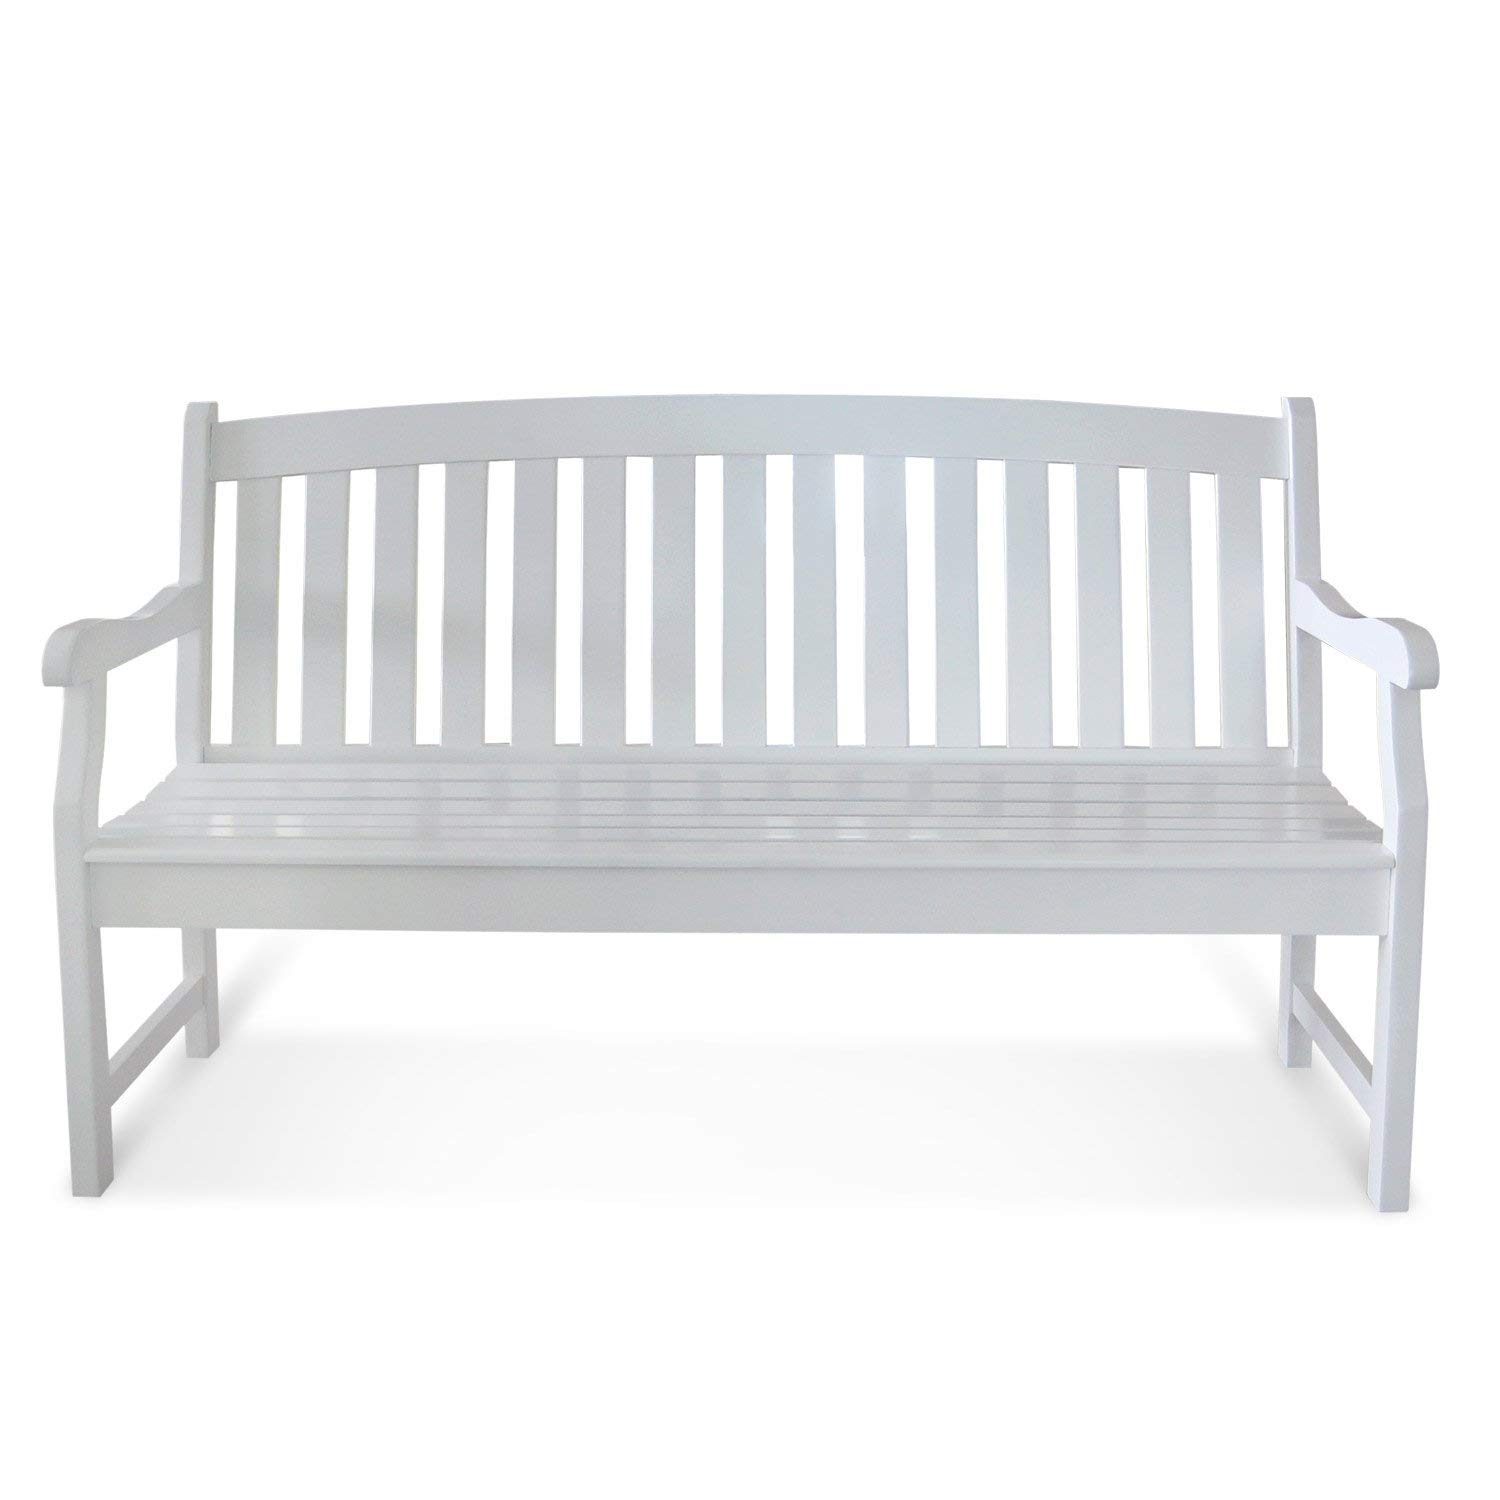 White bench photo